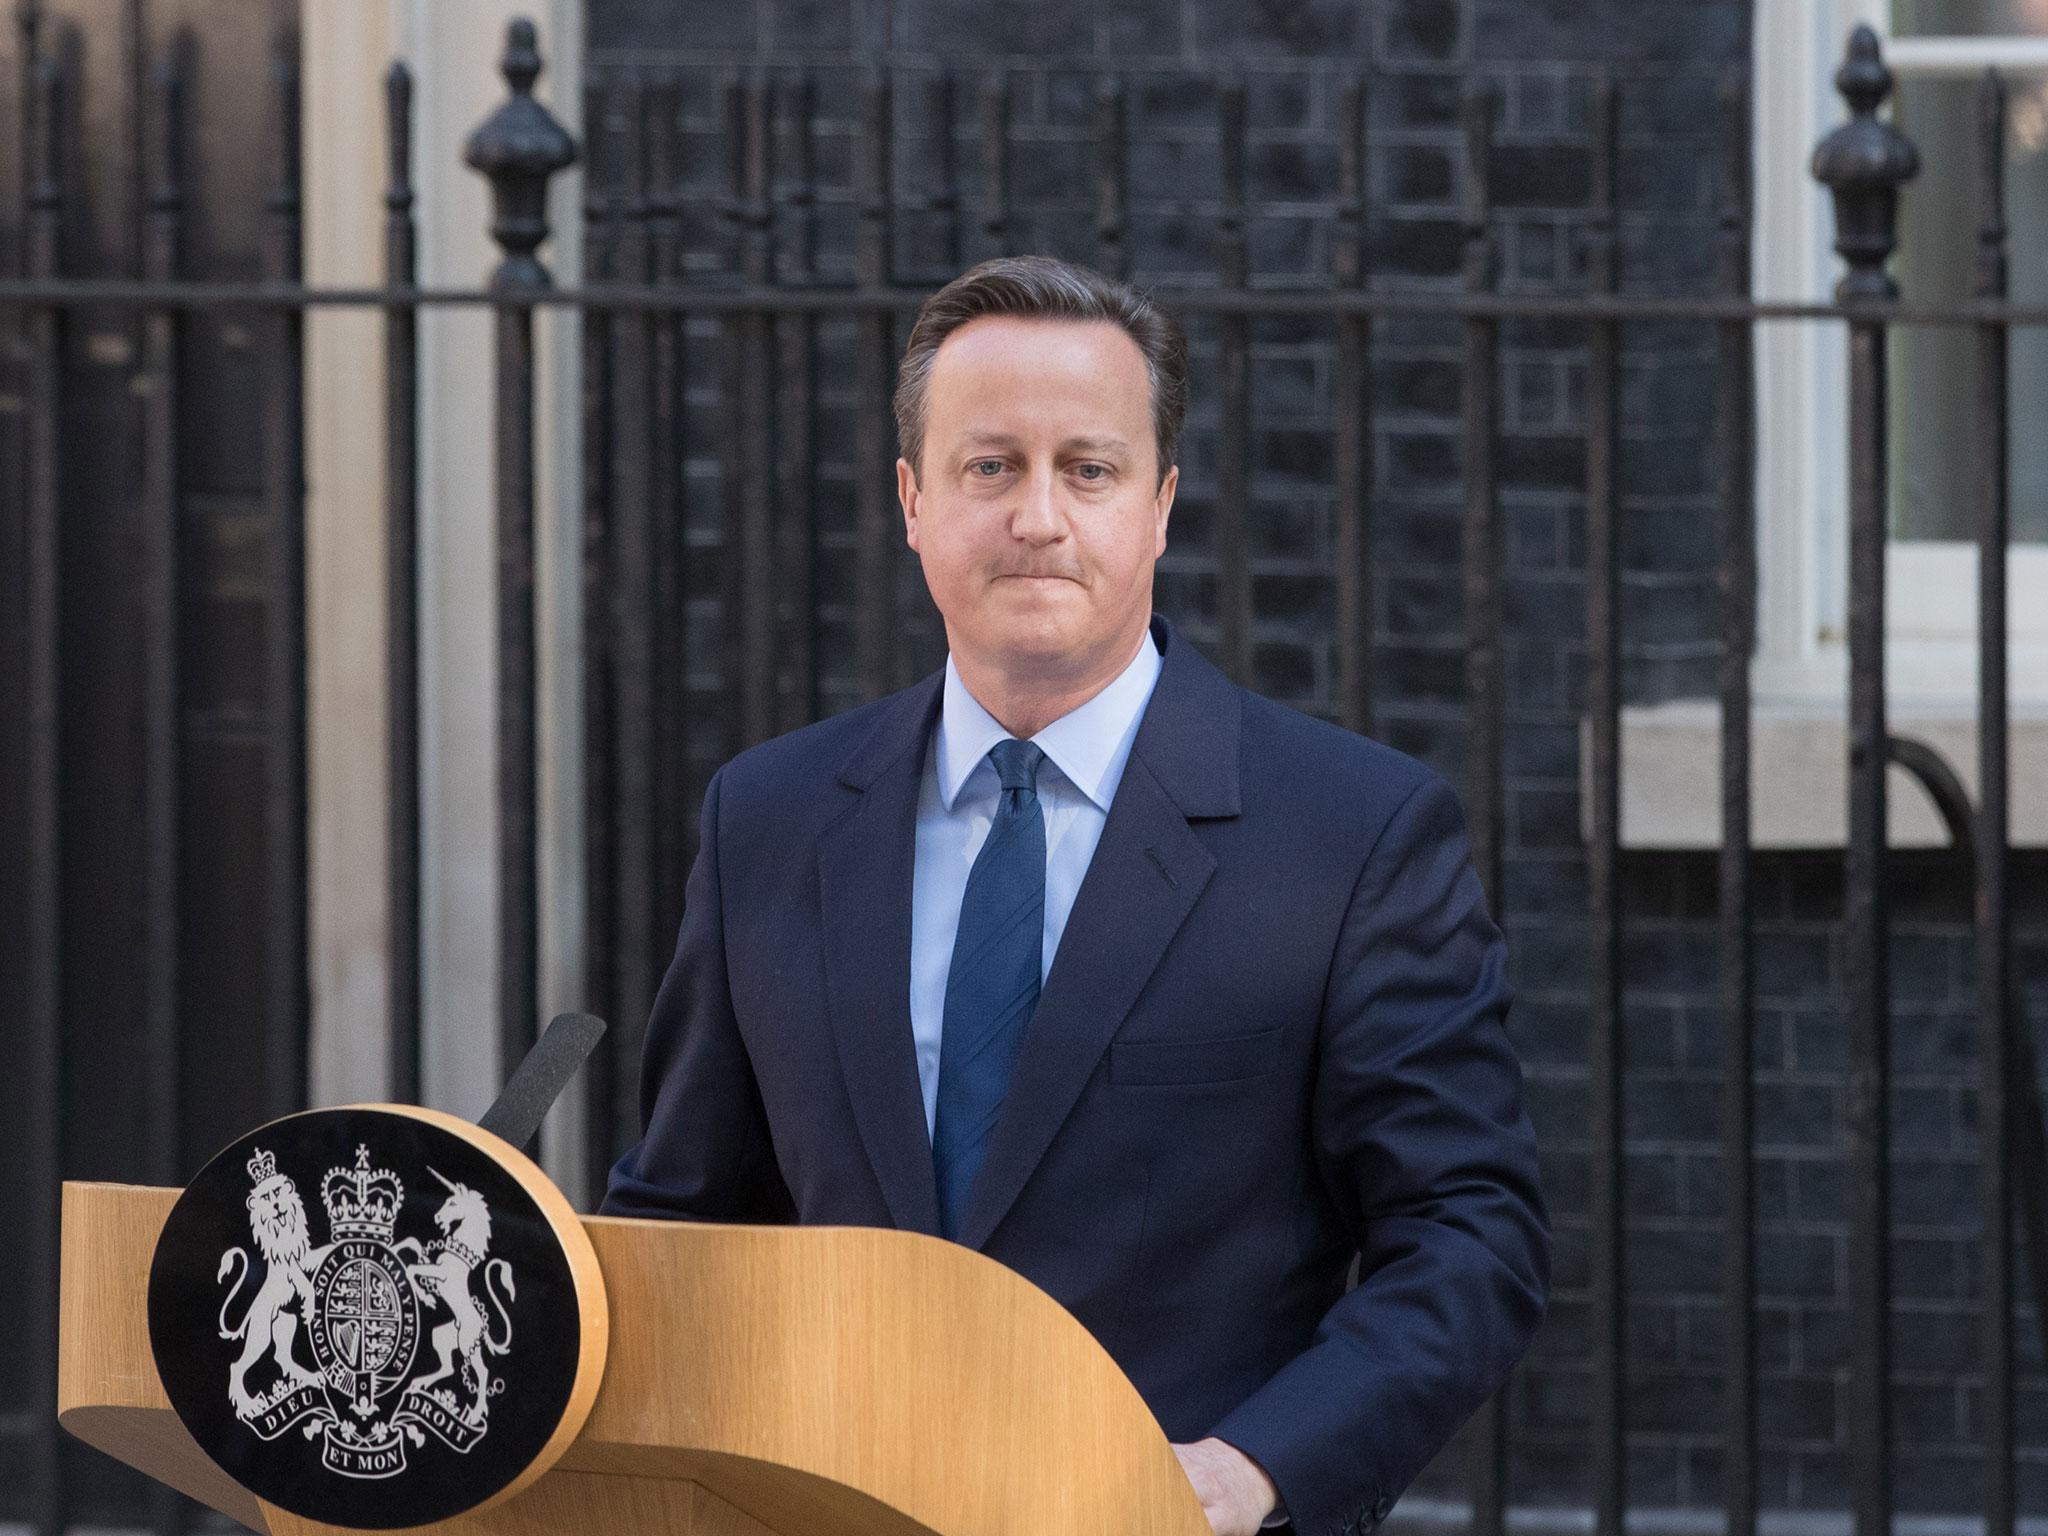 David Cameron was dragged into a cronyism row this summer